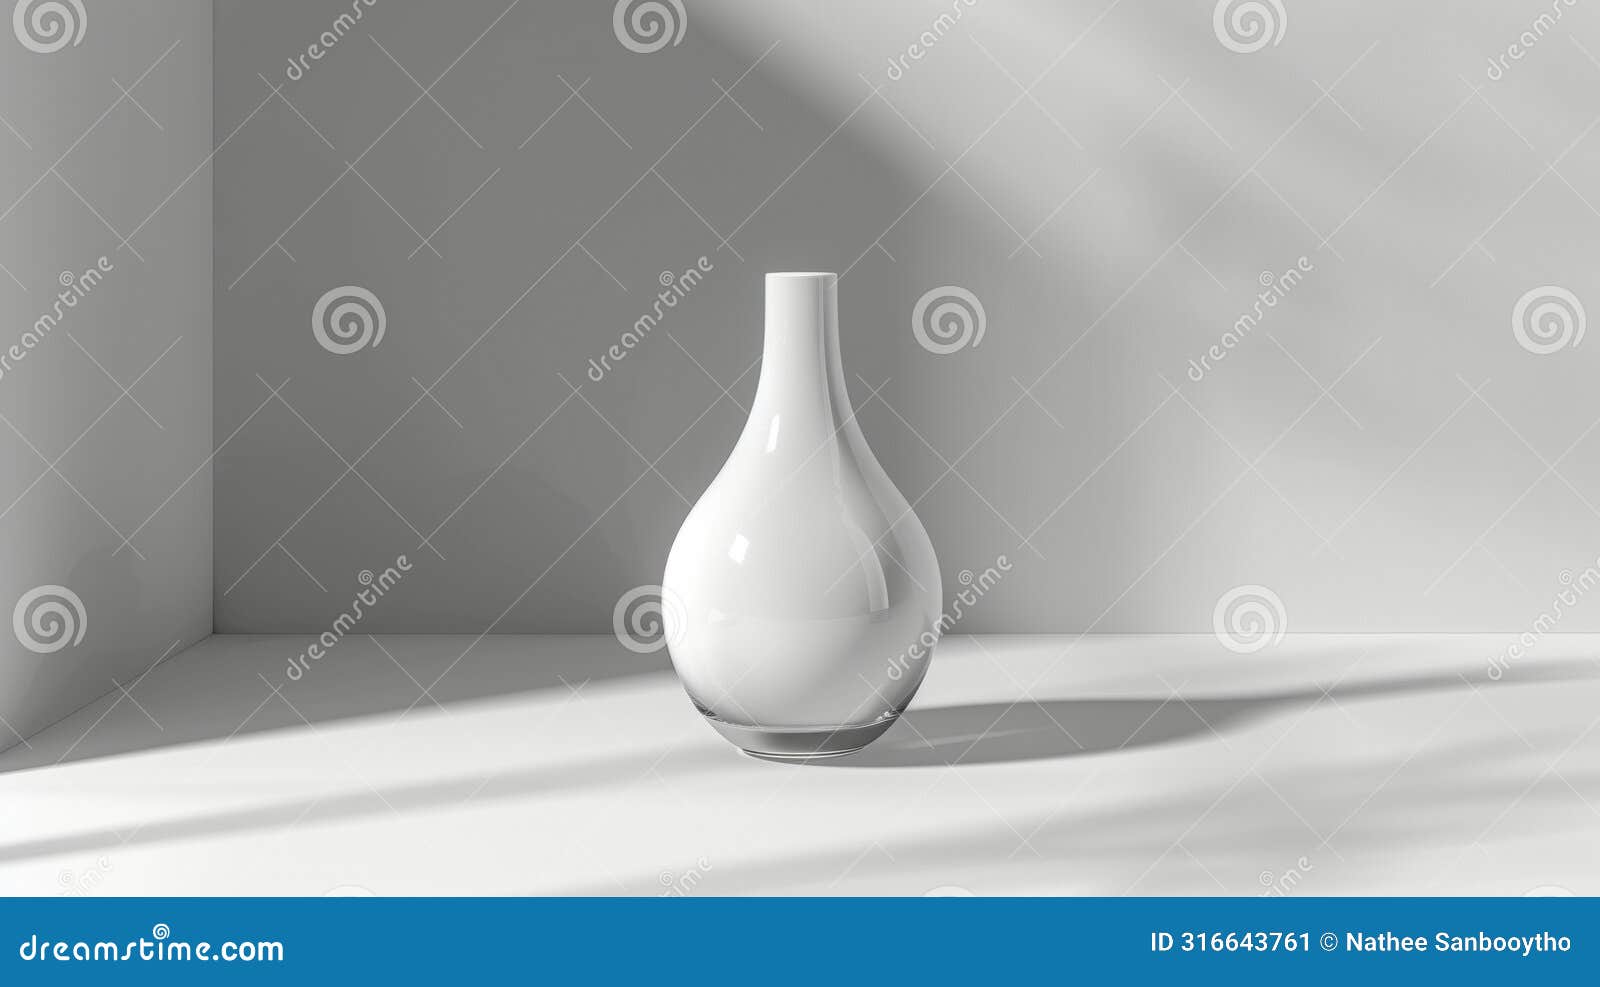 sleek white ceramic vase in soft illumination